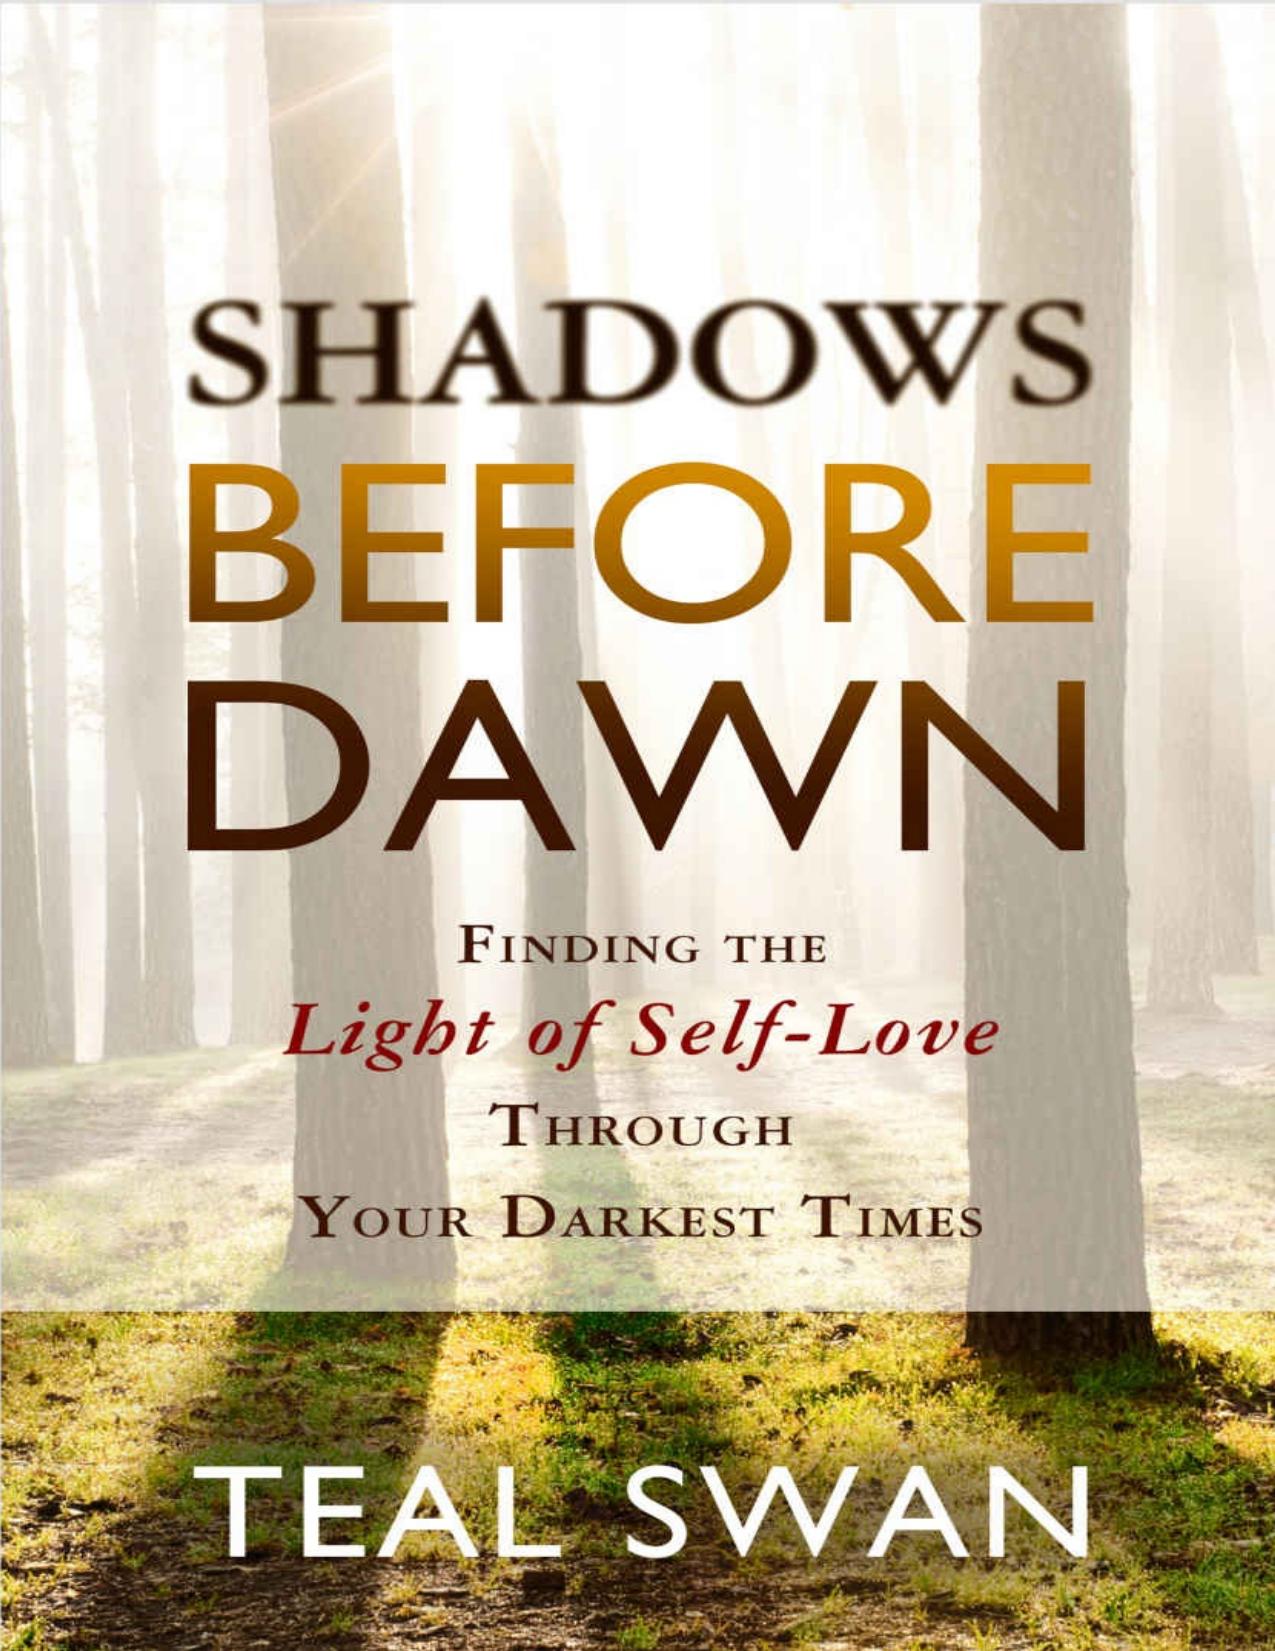 Shadows Before Dawn by Teal Swan